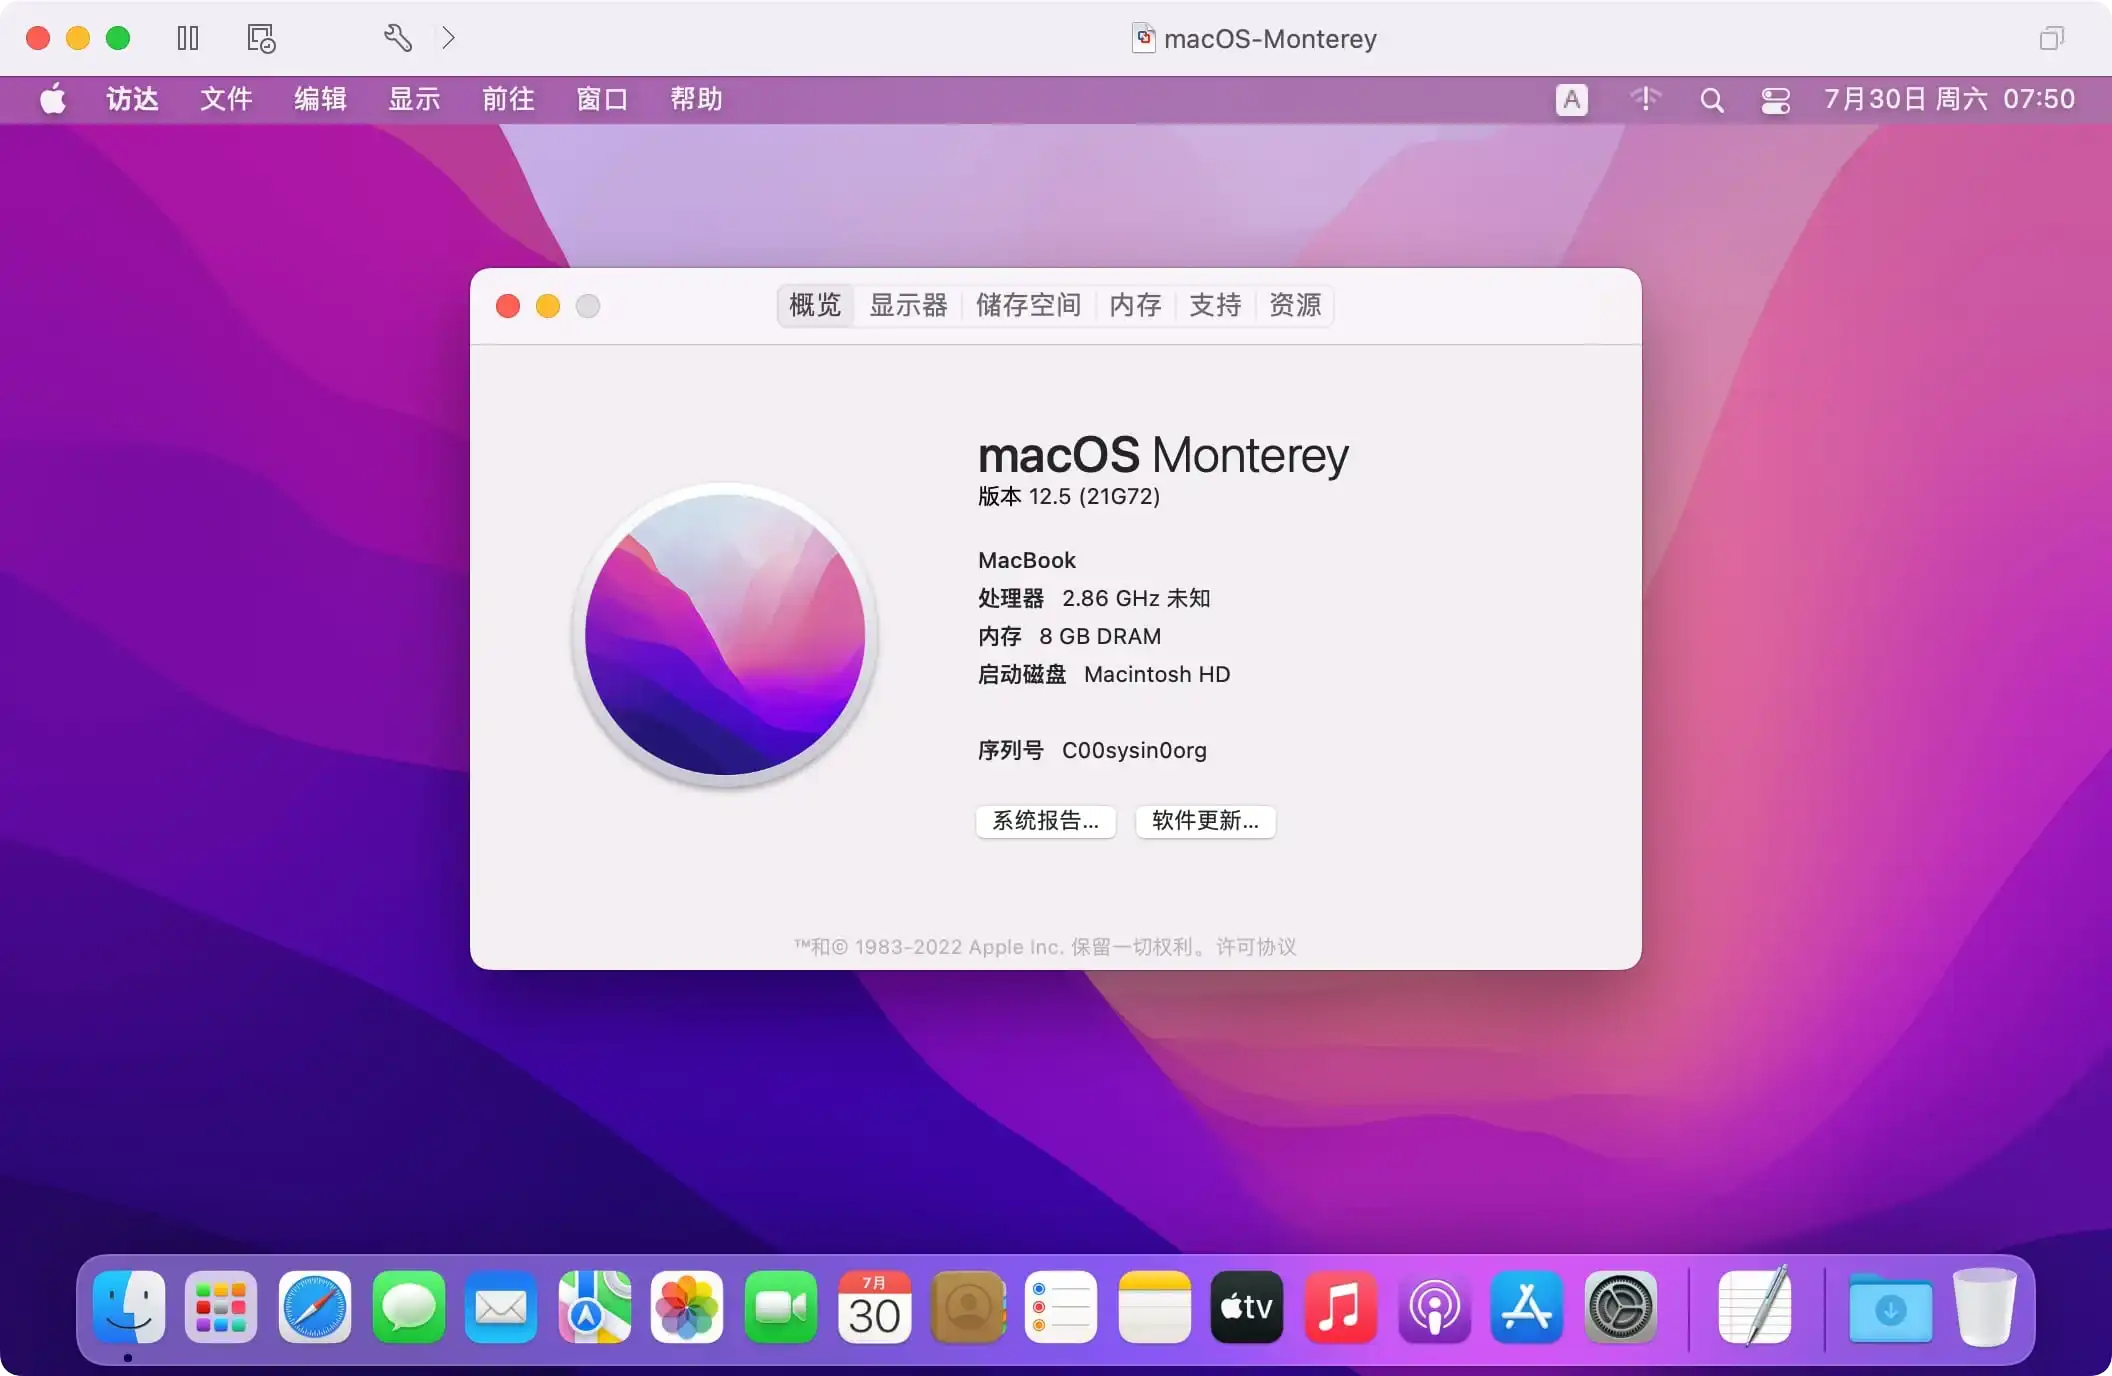 macOS Monterey 运行在 VMware Fusion 中并启用了 Metal GPU 加速